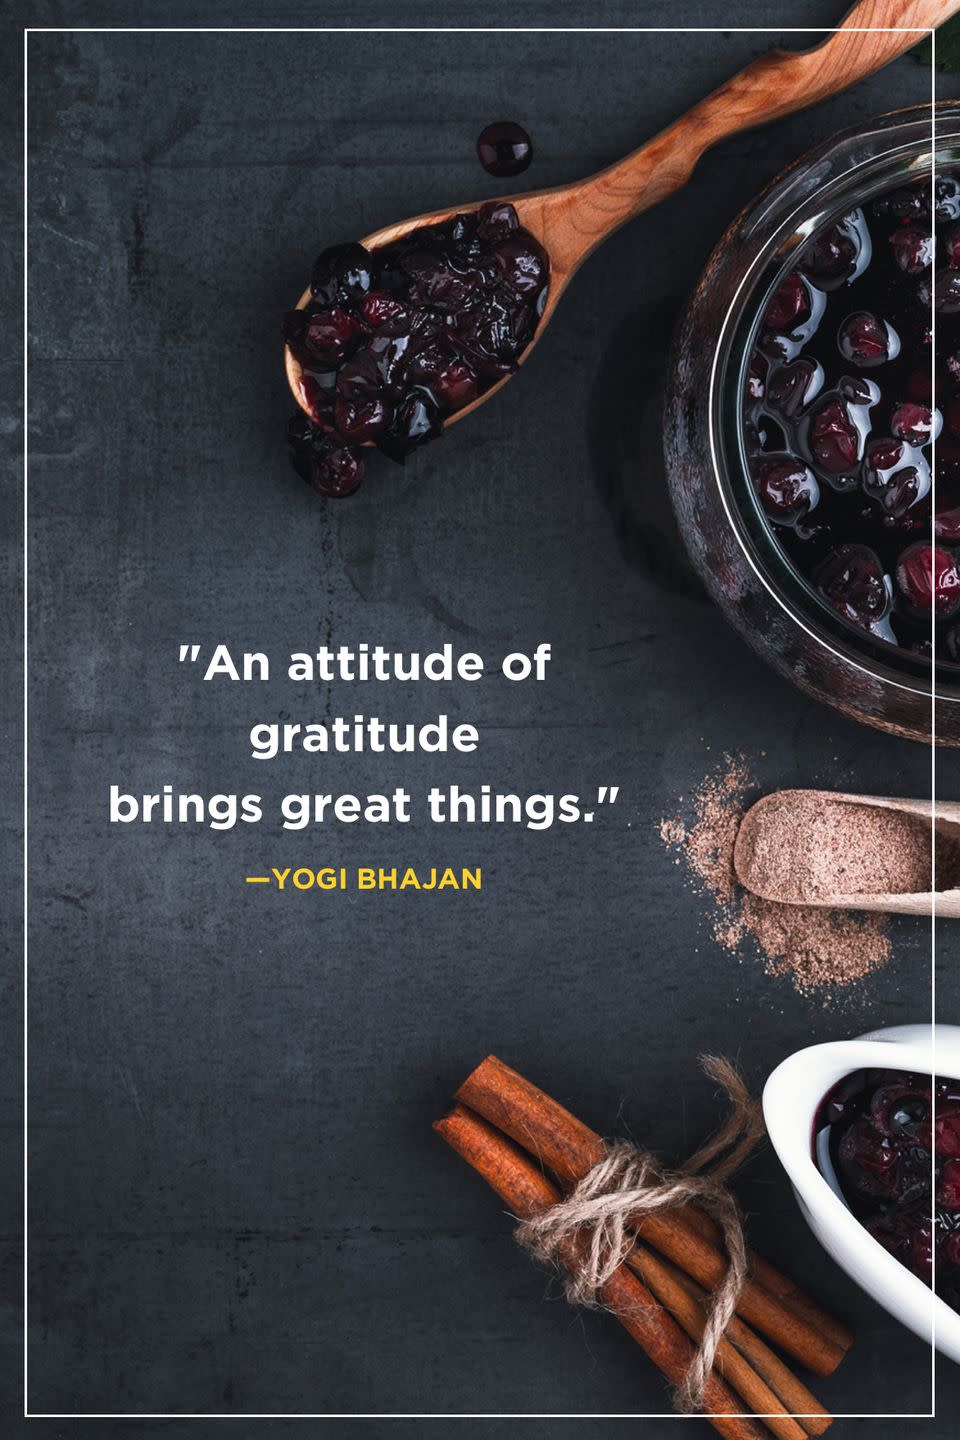 <p>"An attitude of gratitude brings great things."</p>